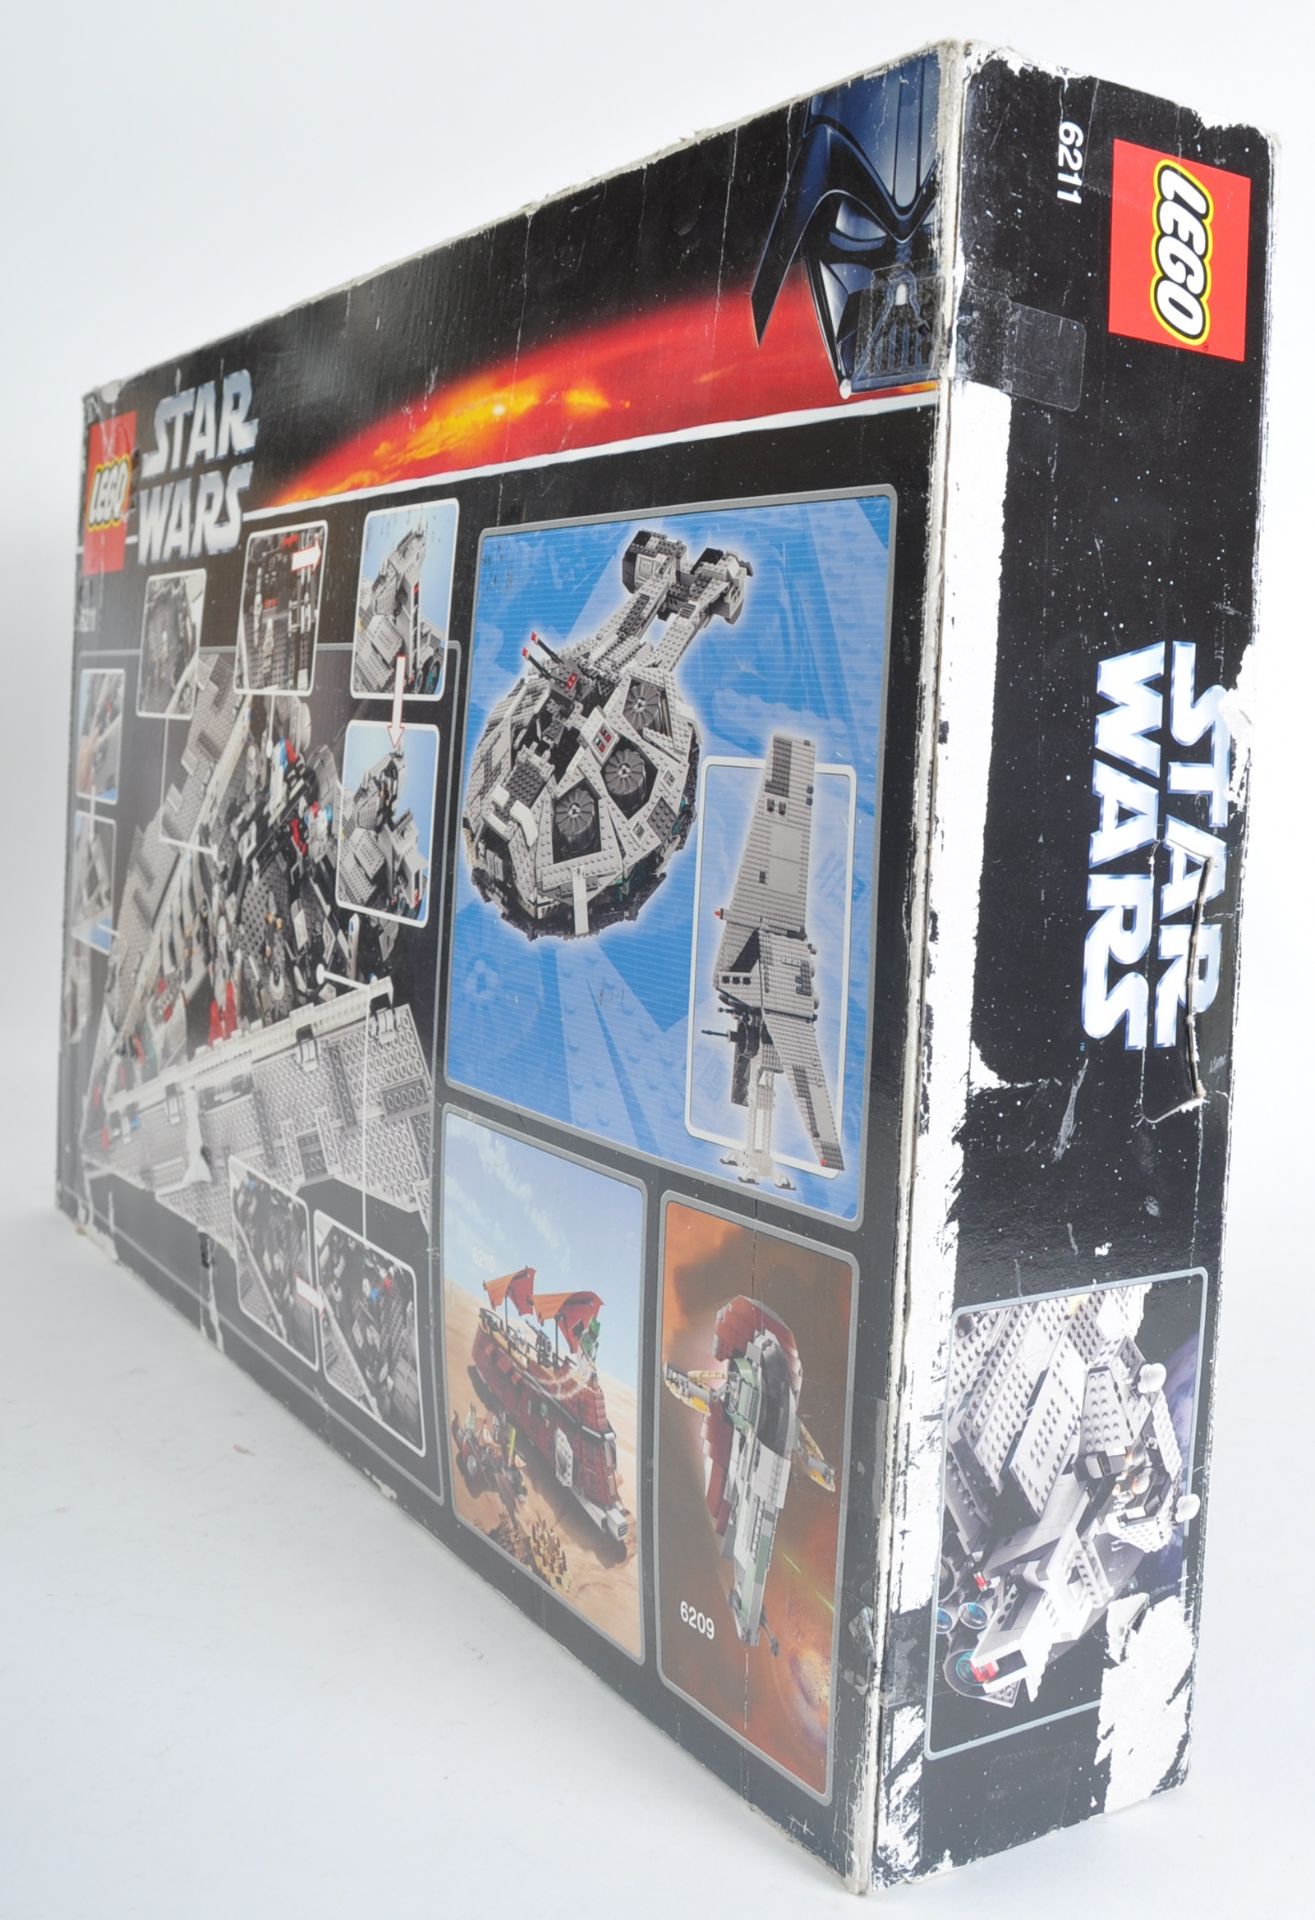 LEGO SET - LEGO STAR WARS - 6211 - IMPERIAL STAR DESTROYER - Image 3 of 4